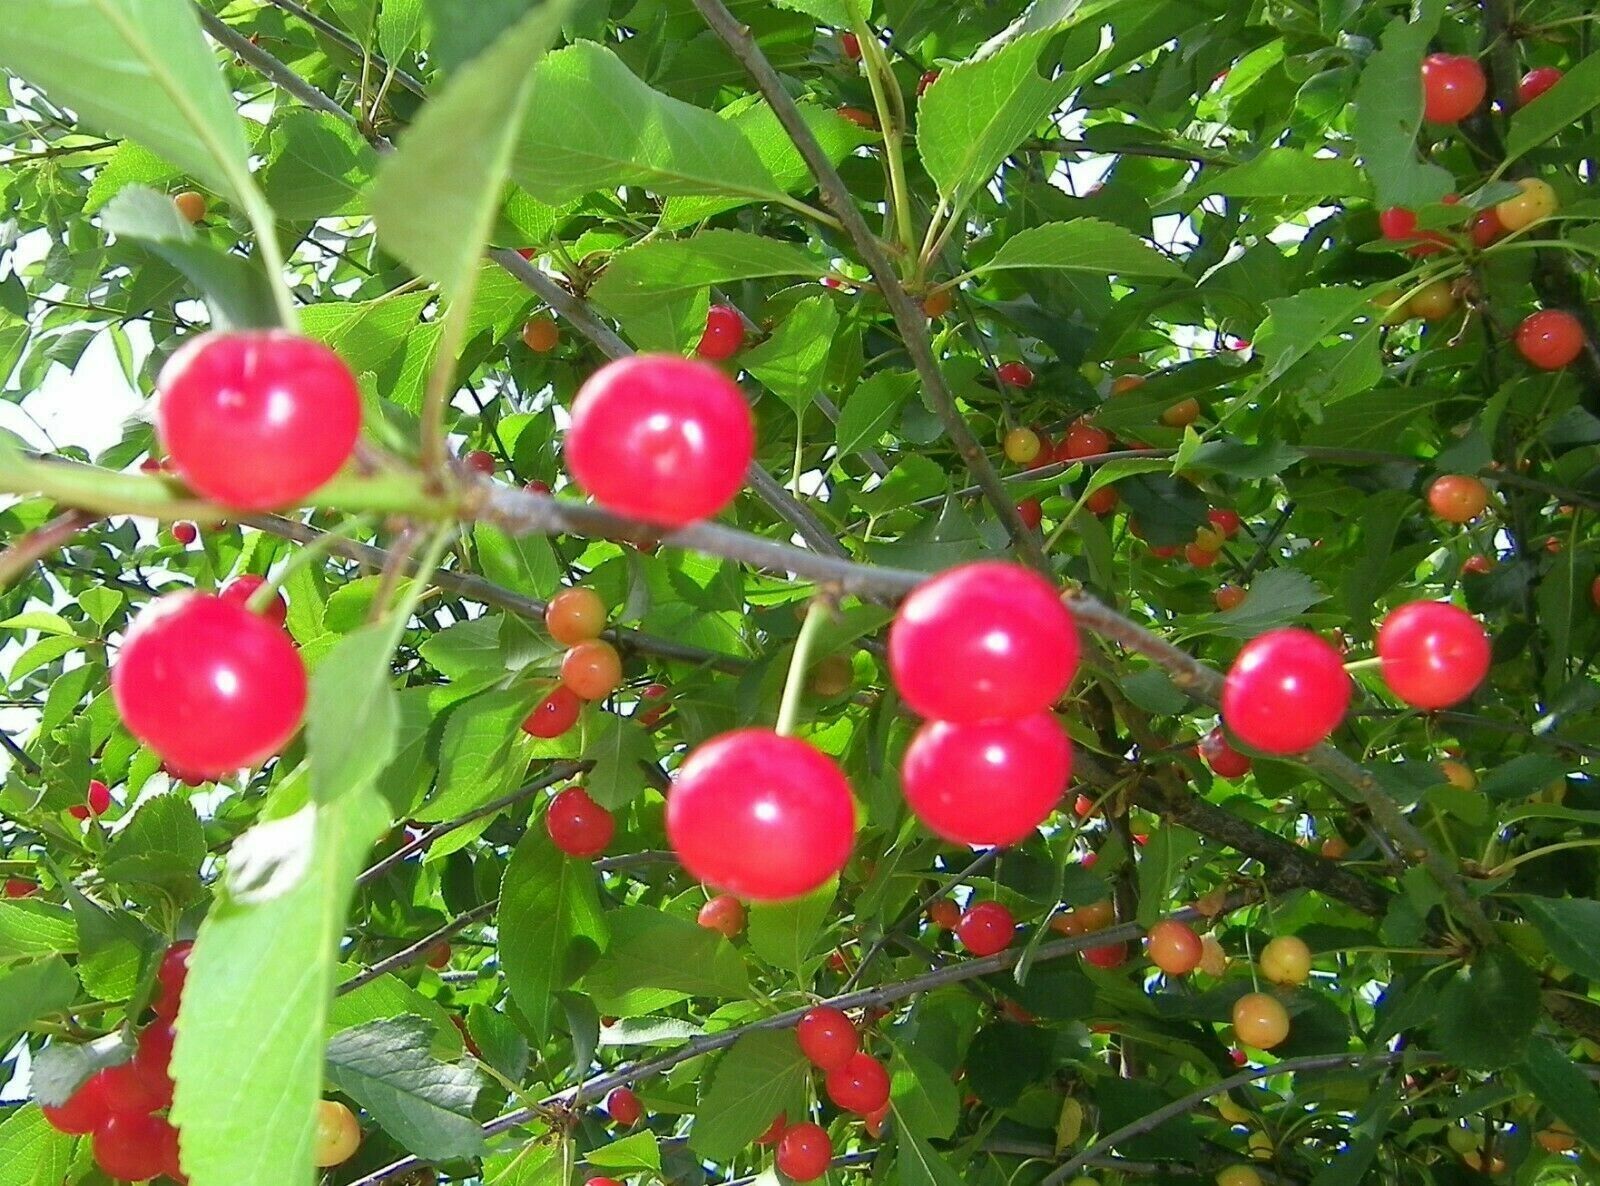 British Columbia Early Richmond Cherry Tree Seeds - High Yieldin